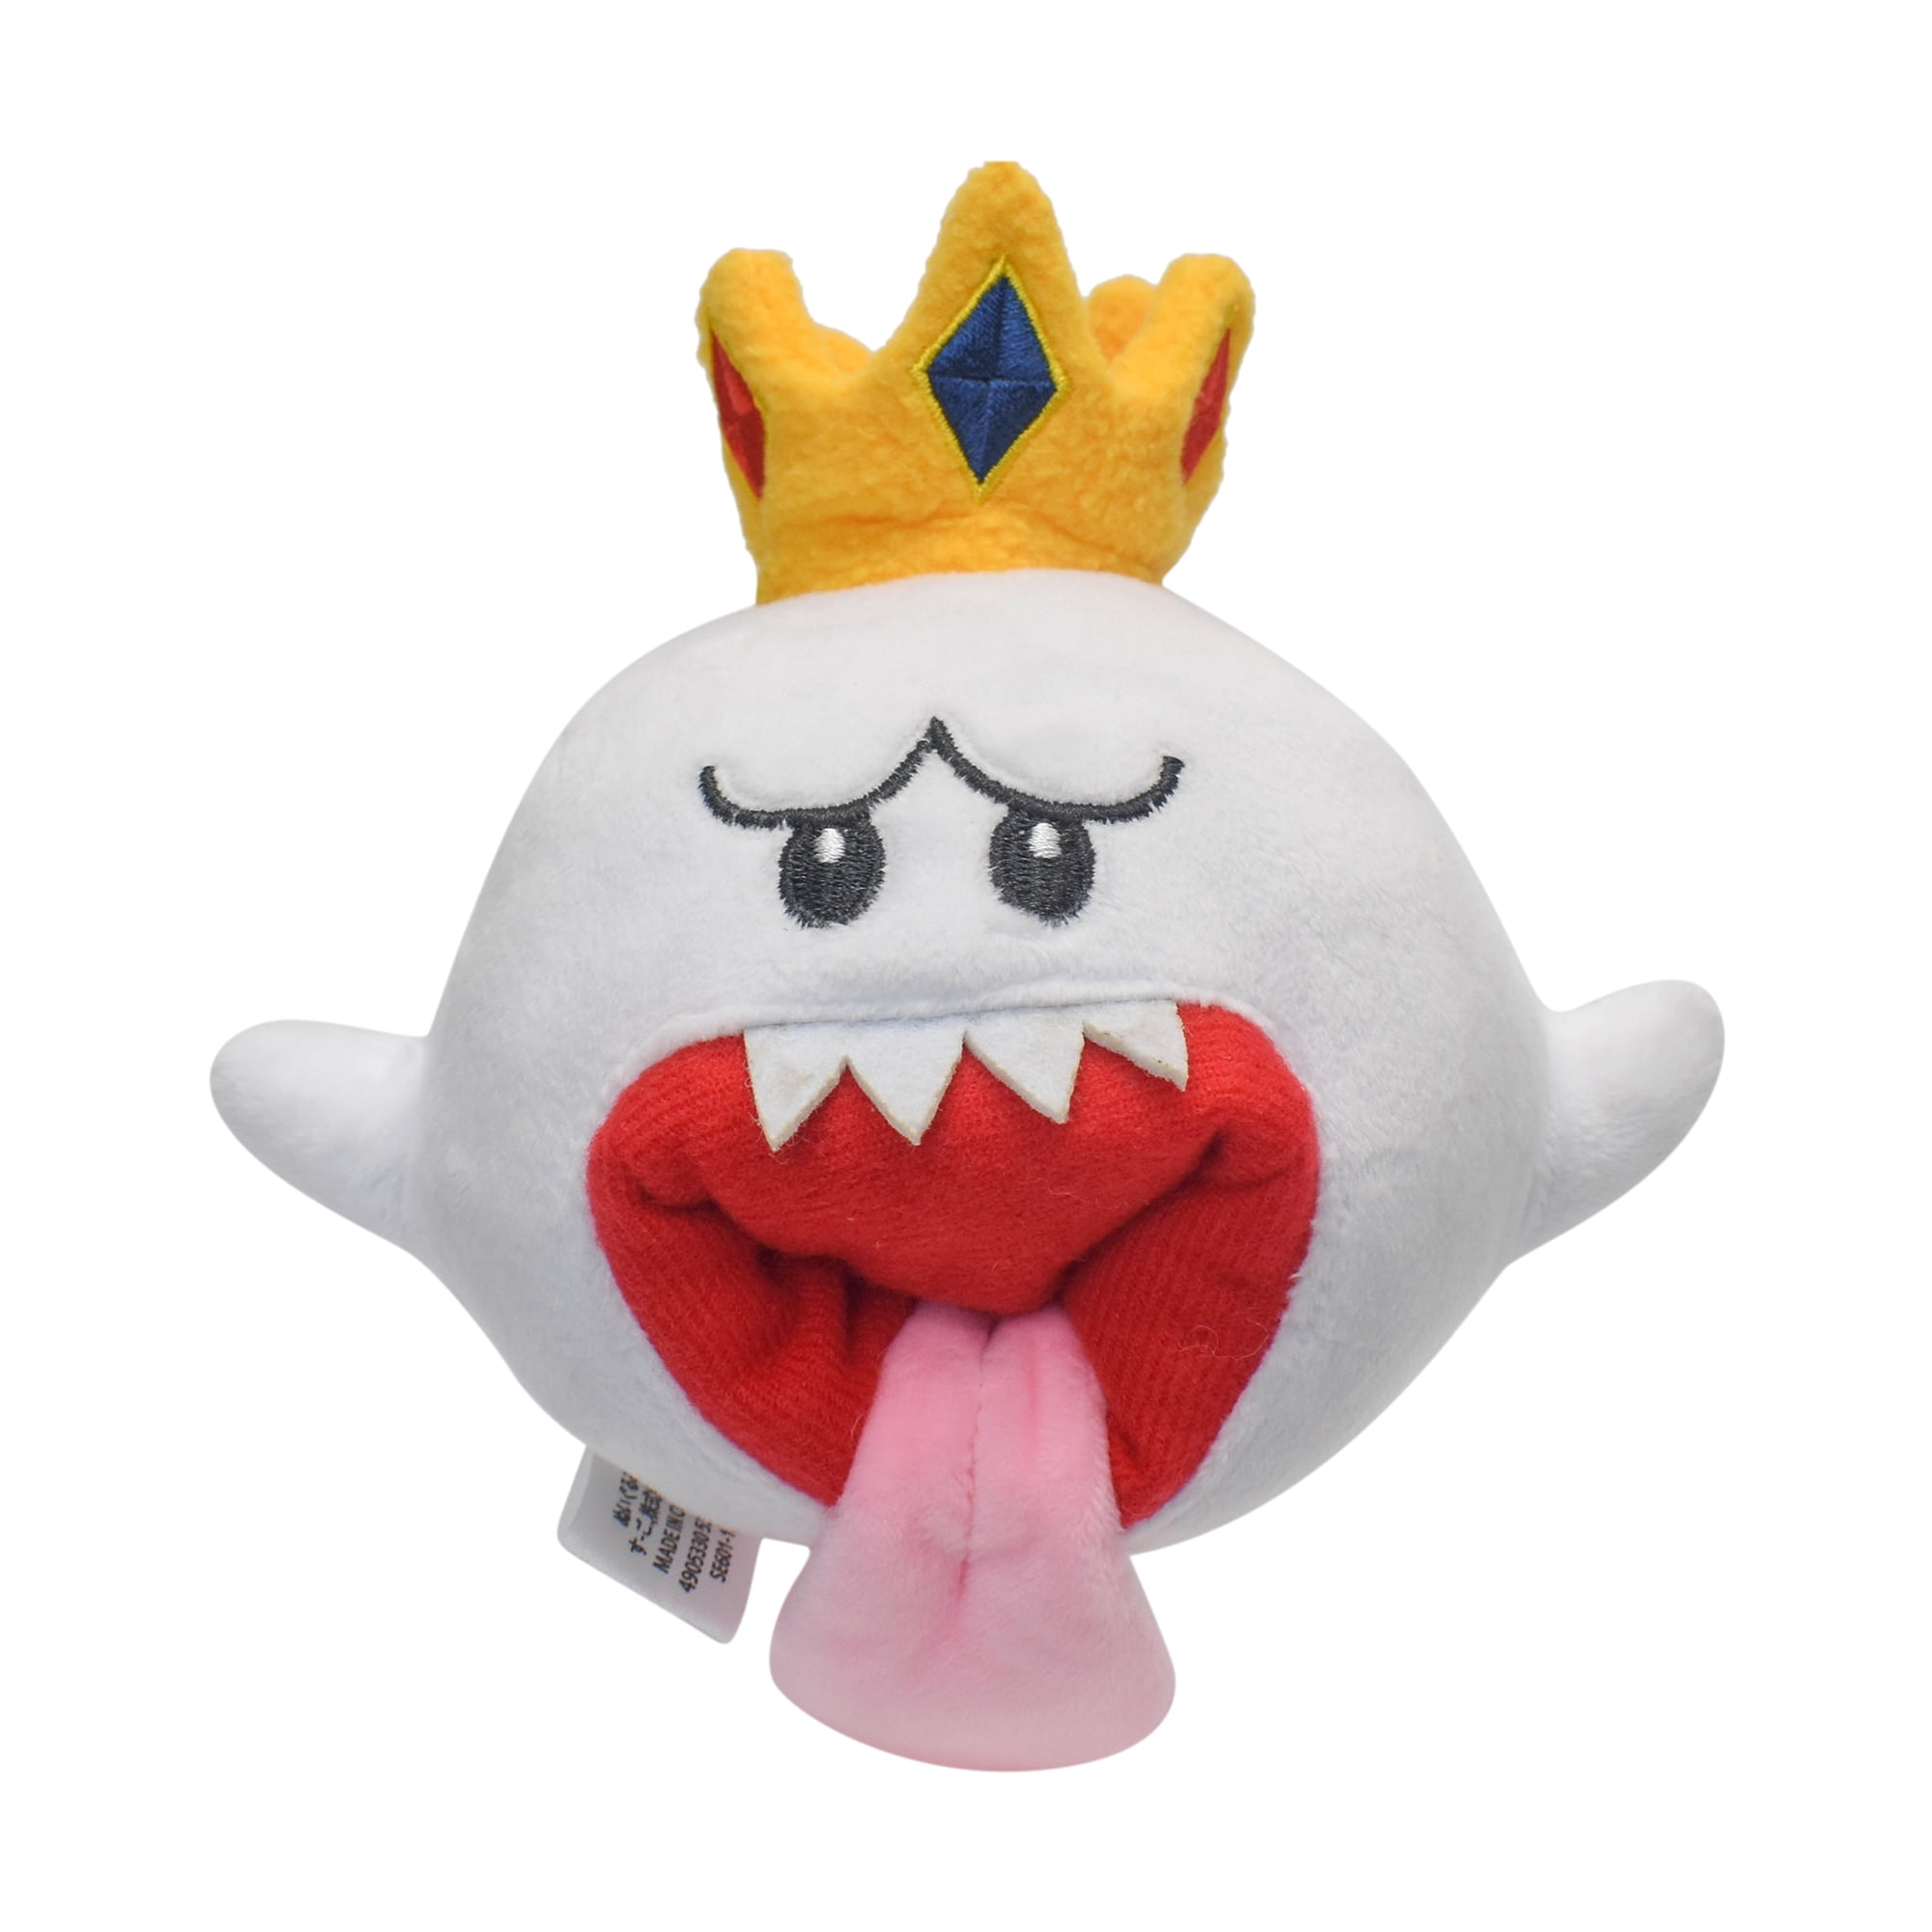 6“ Plush Boo Ghost Super Mario Bros Soft Stuffed Animal Kid Toy Birthday Gift 